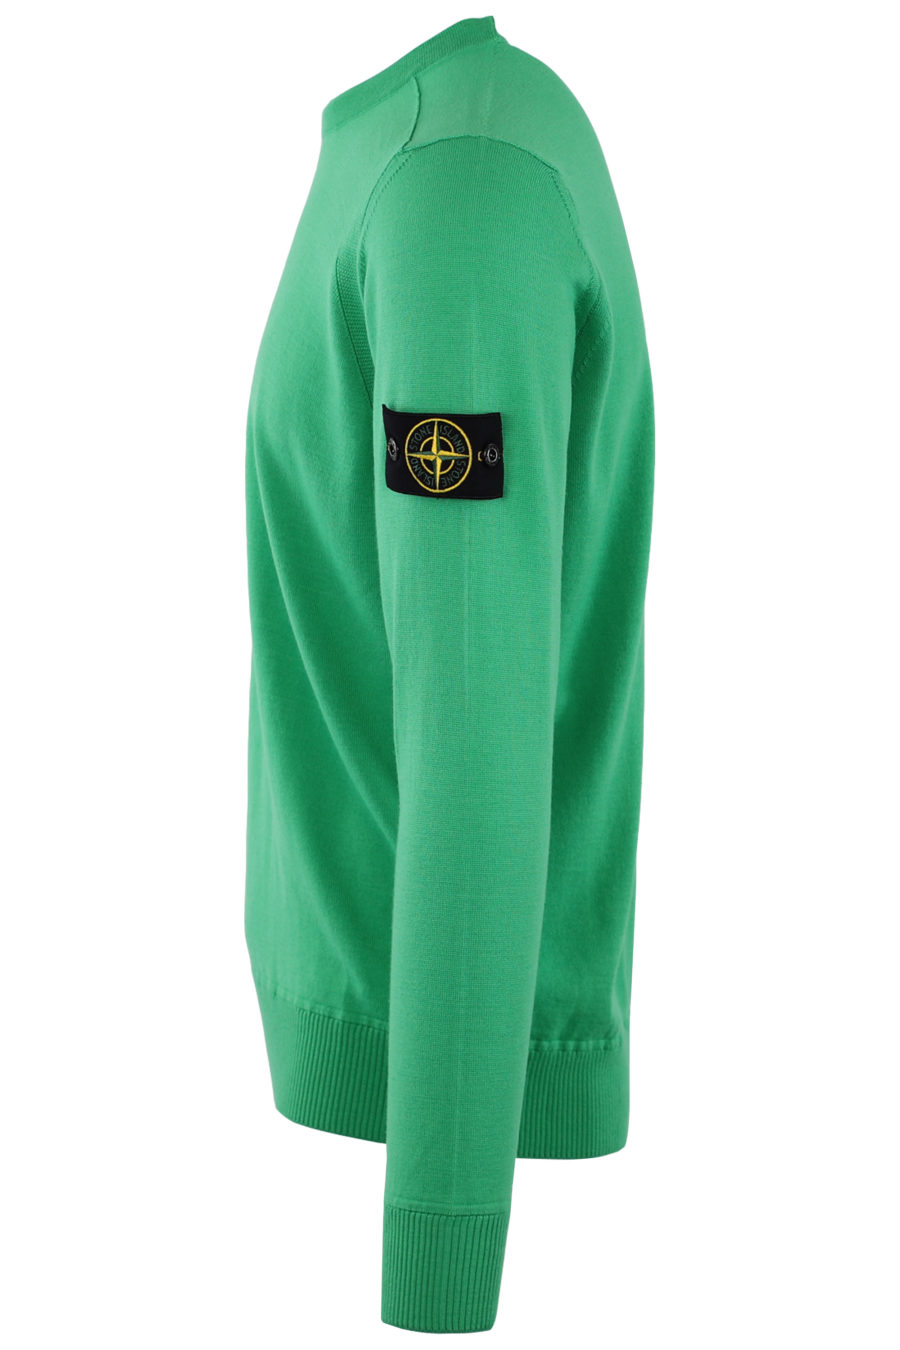 Jersey verde de lana con logo parche - IMG 9129